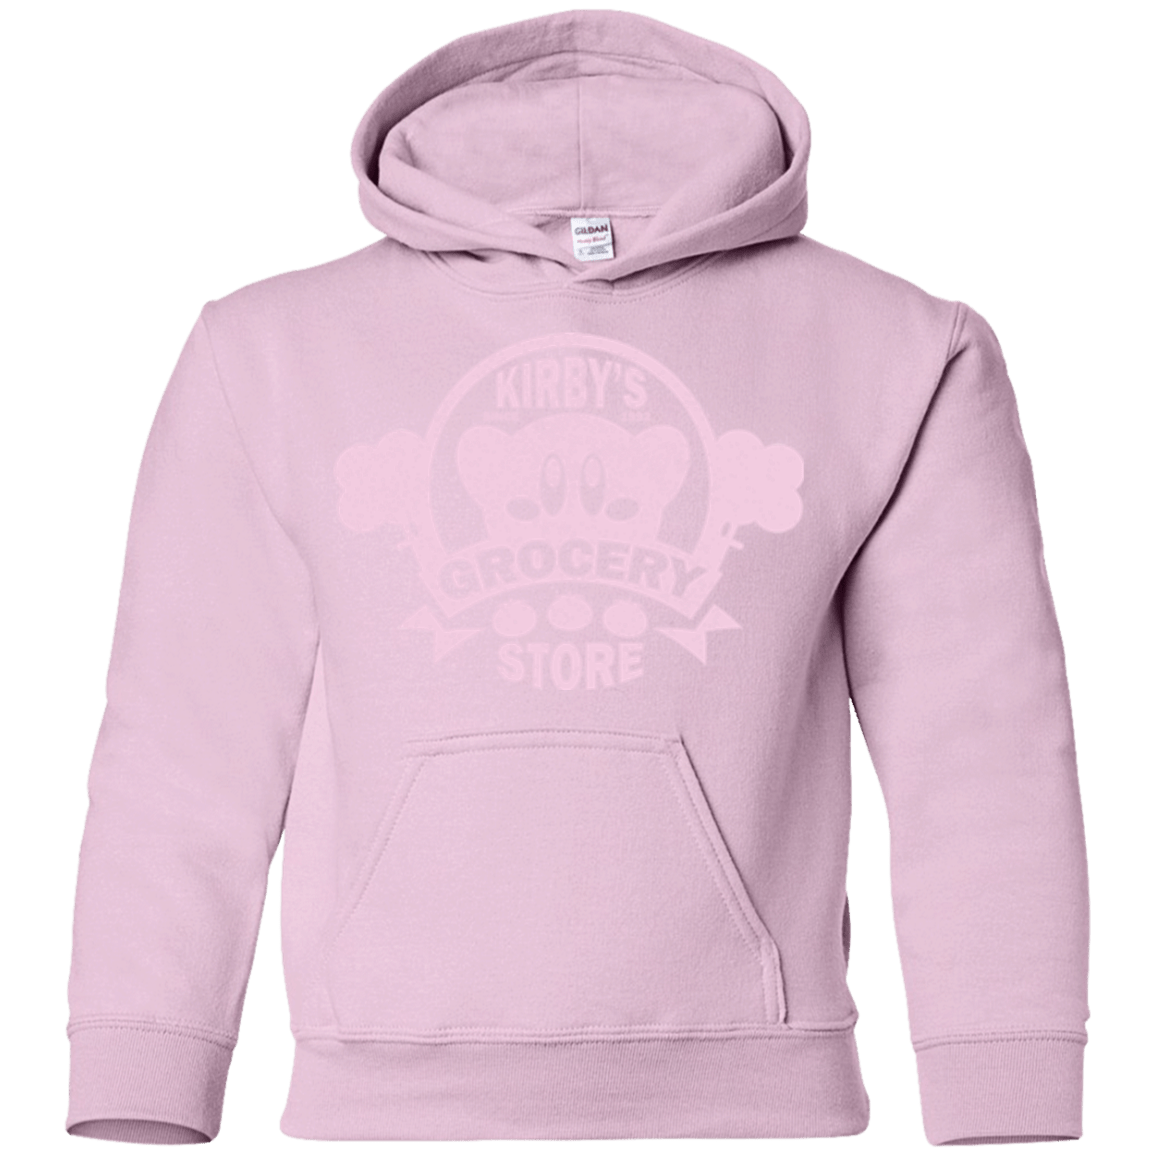 Sweatshirts Light Pink / YS Kirbys Grocery Store Youth Hoodie